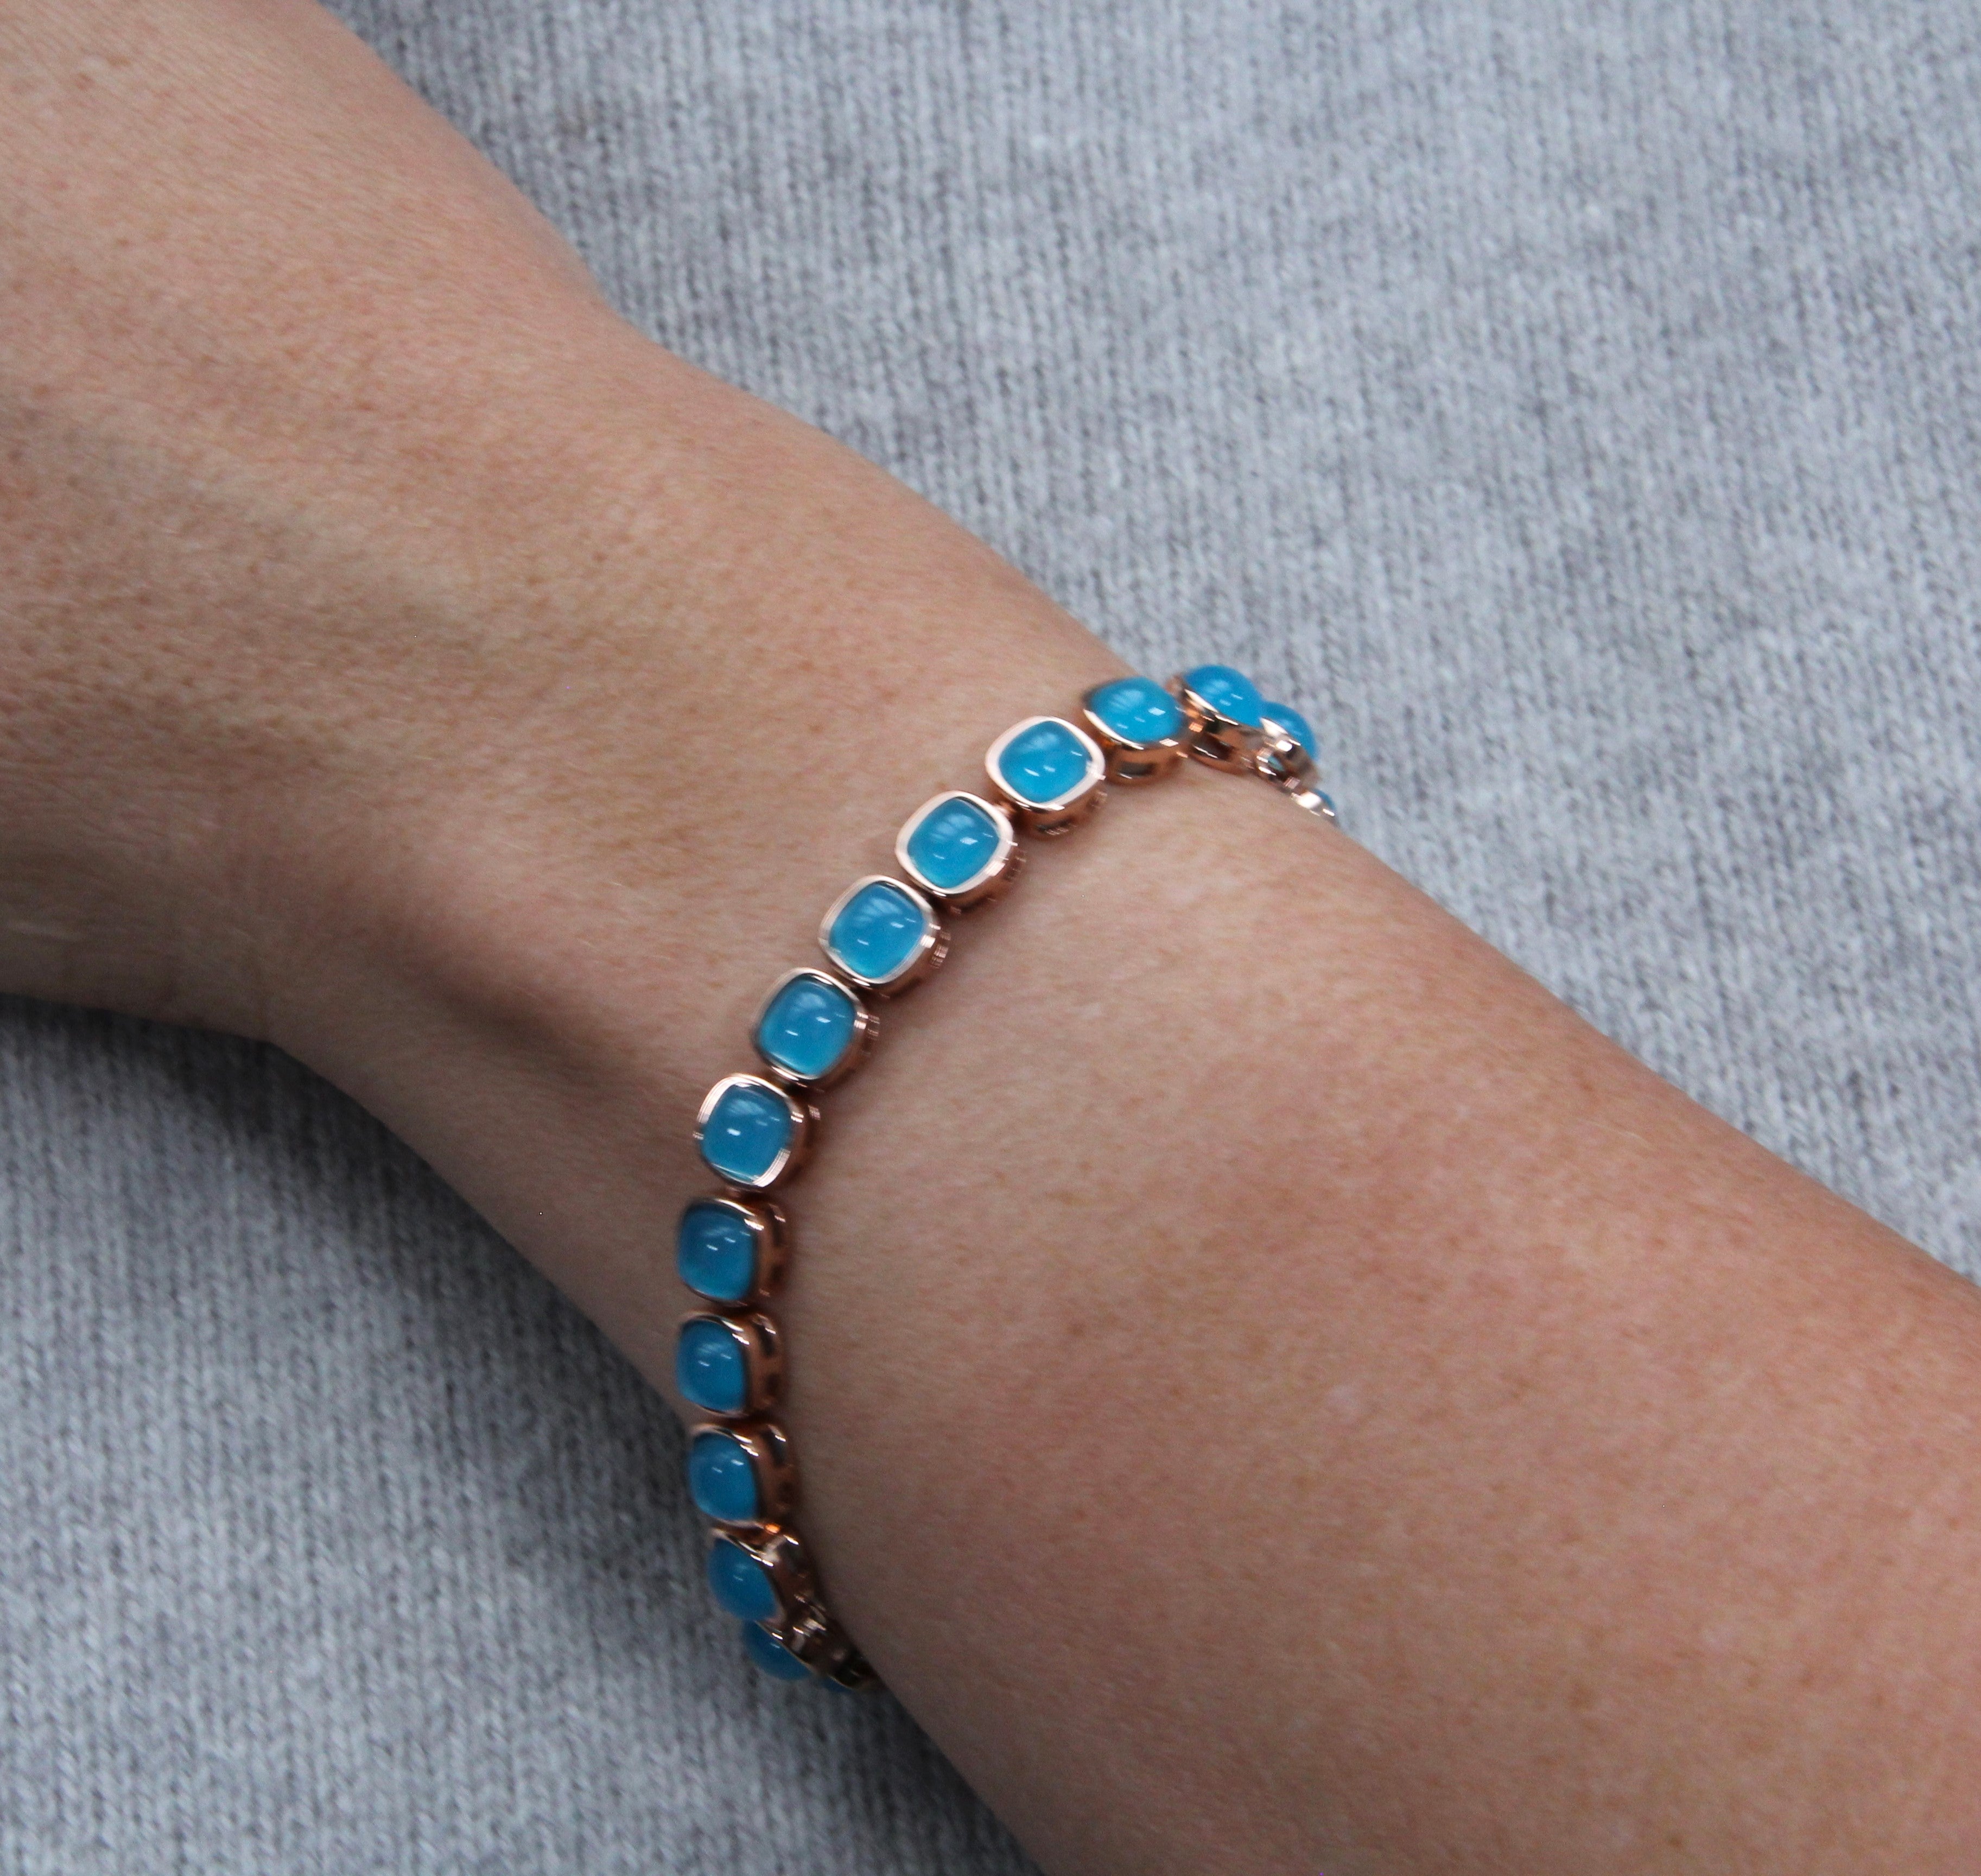 MariaKinz Blue Heart Crystal Bracelet for Women, Girls